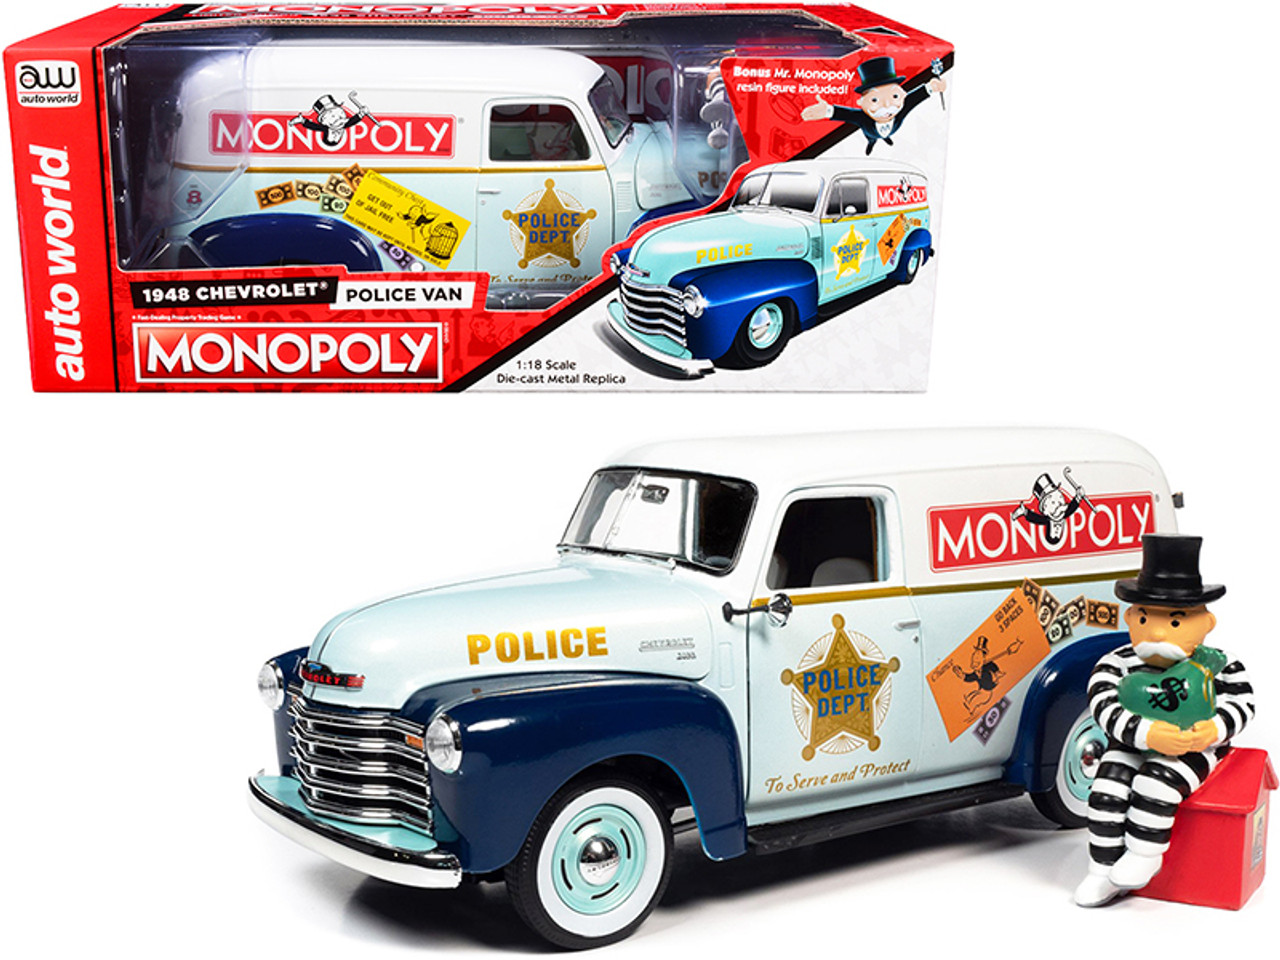 1/18 Auto World 1948 Chevrolet Panel Police Van with Mr. Monopoly Figurine "Monopoly" Diecast Car Model